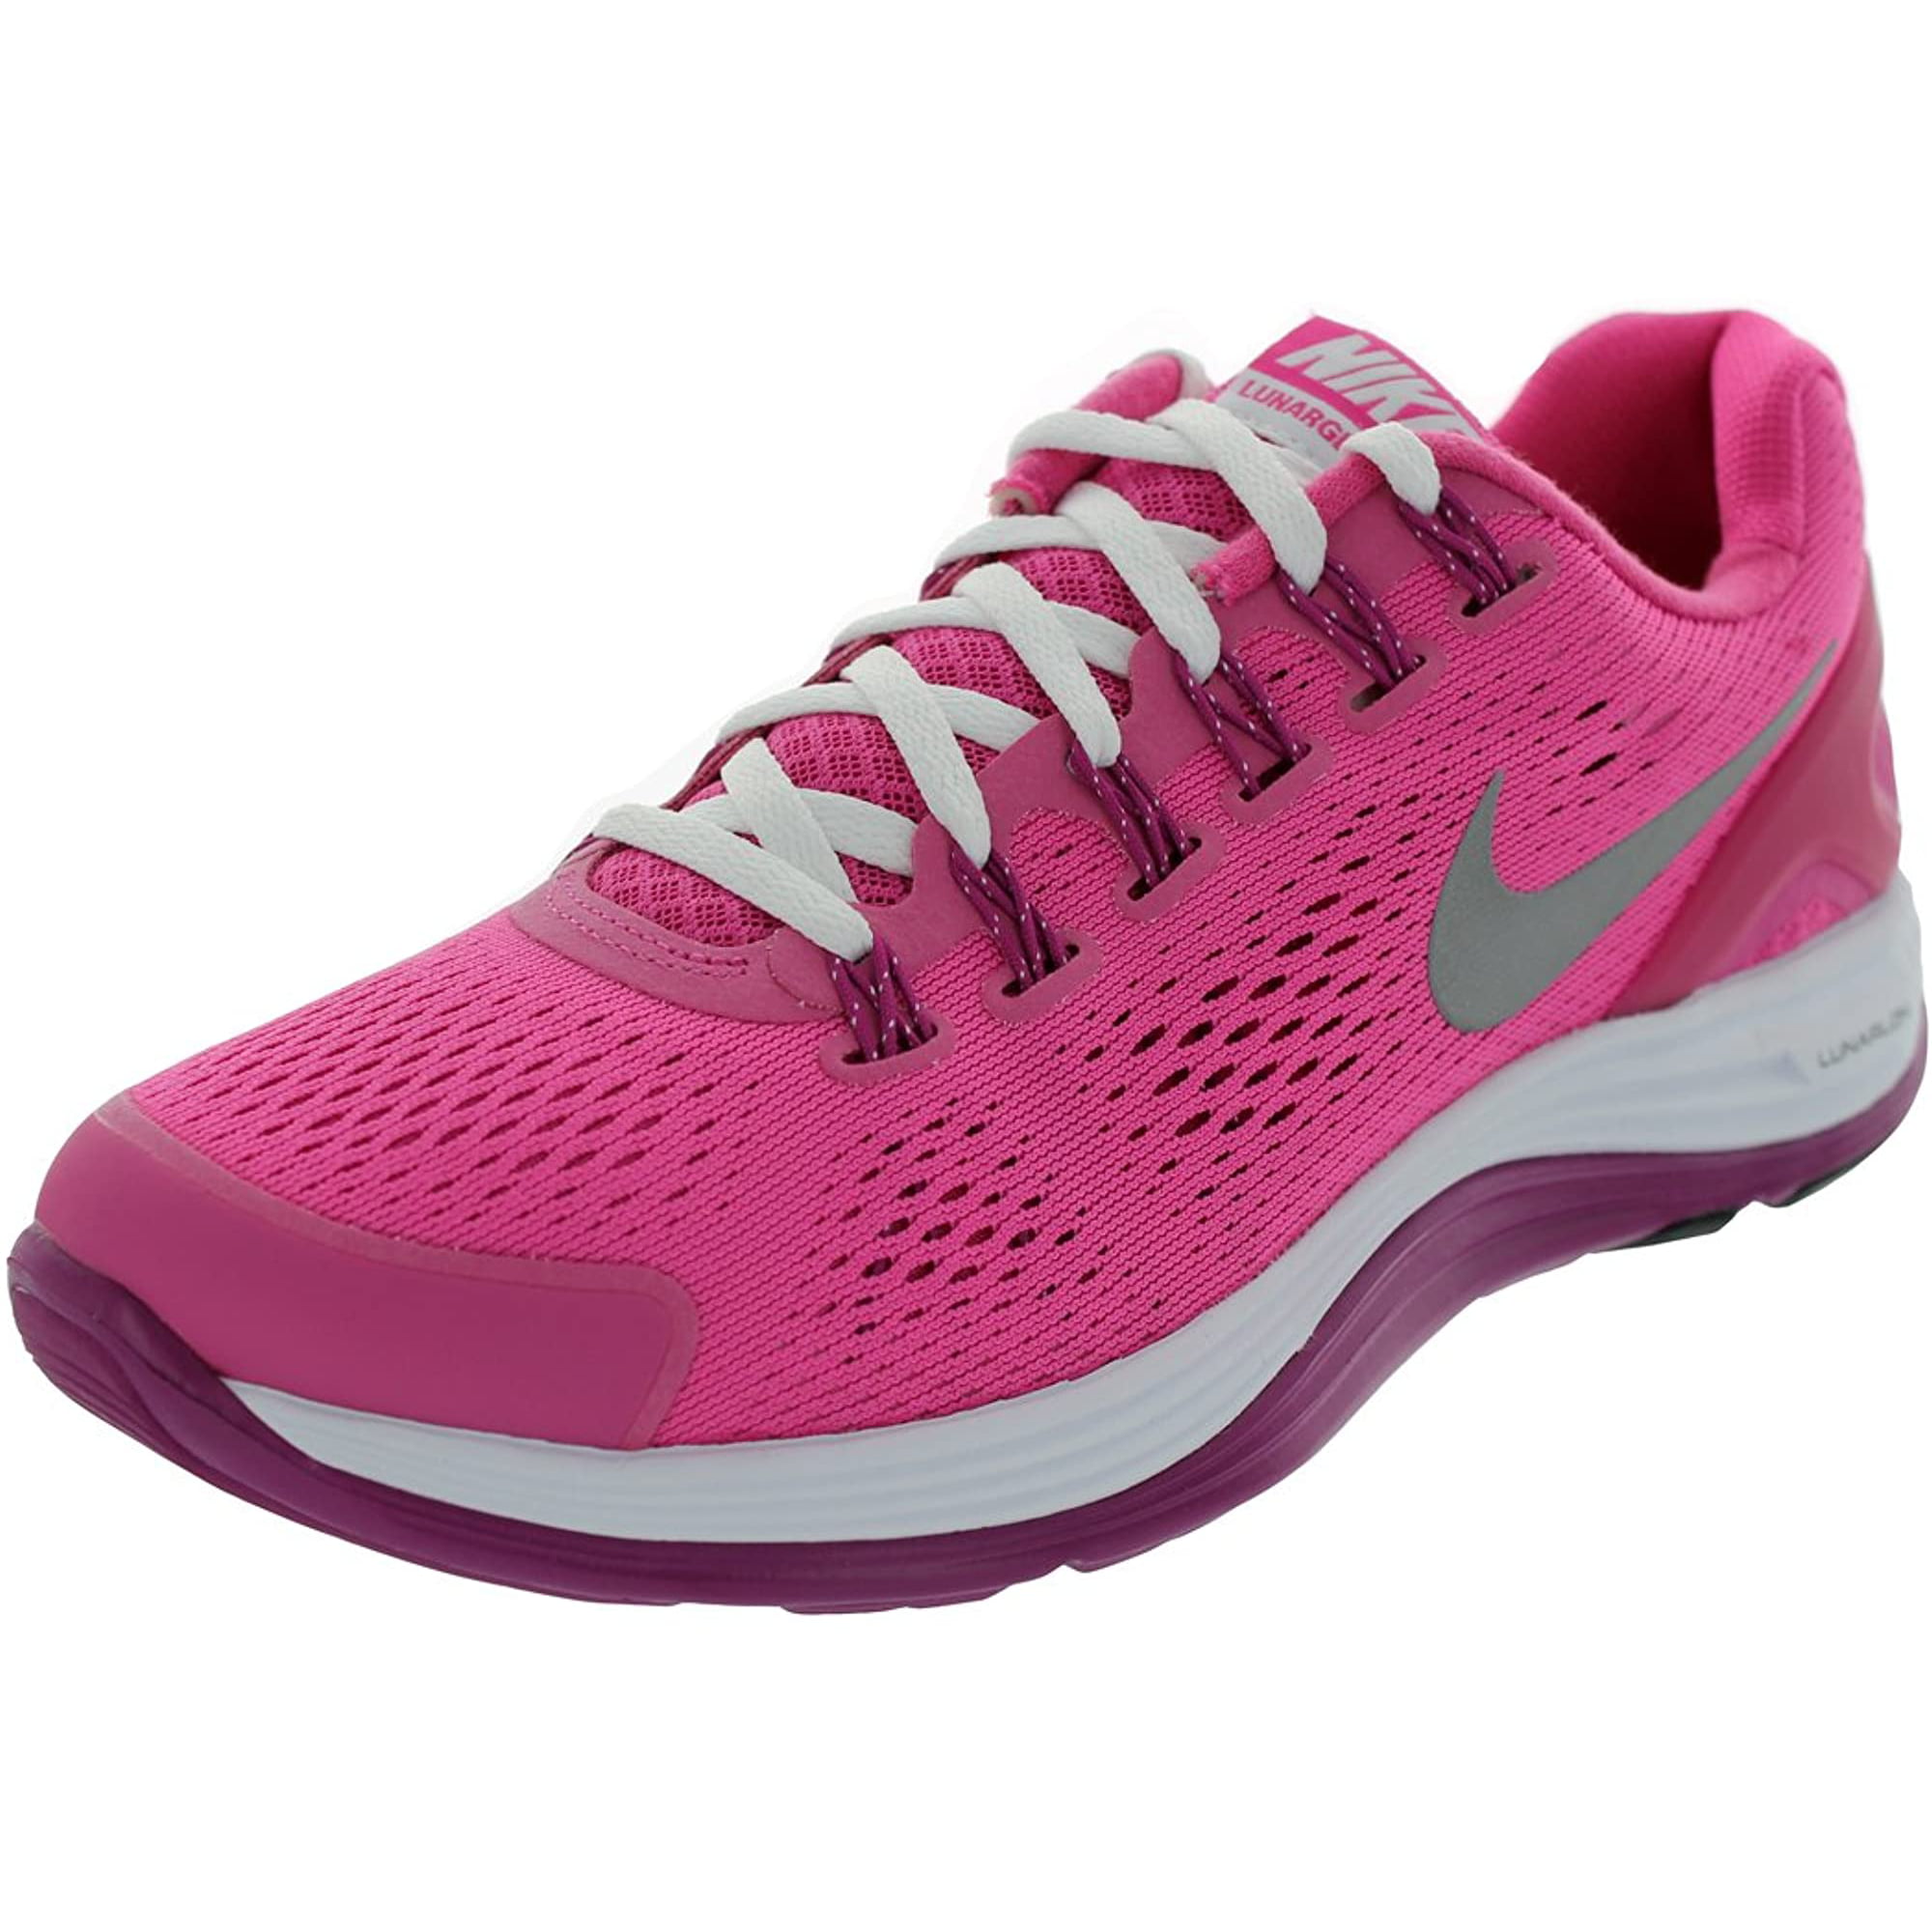 Inicialmente encender un fuego Cantidad de dinero Nike Lunarglide 4 Dersert Pink Rave Pink Black Reflect Silver GS Kids  Running GS | Walmart Canada